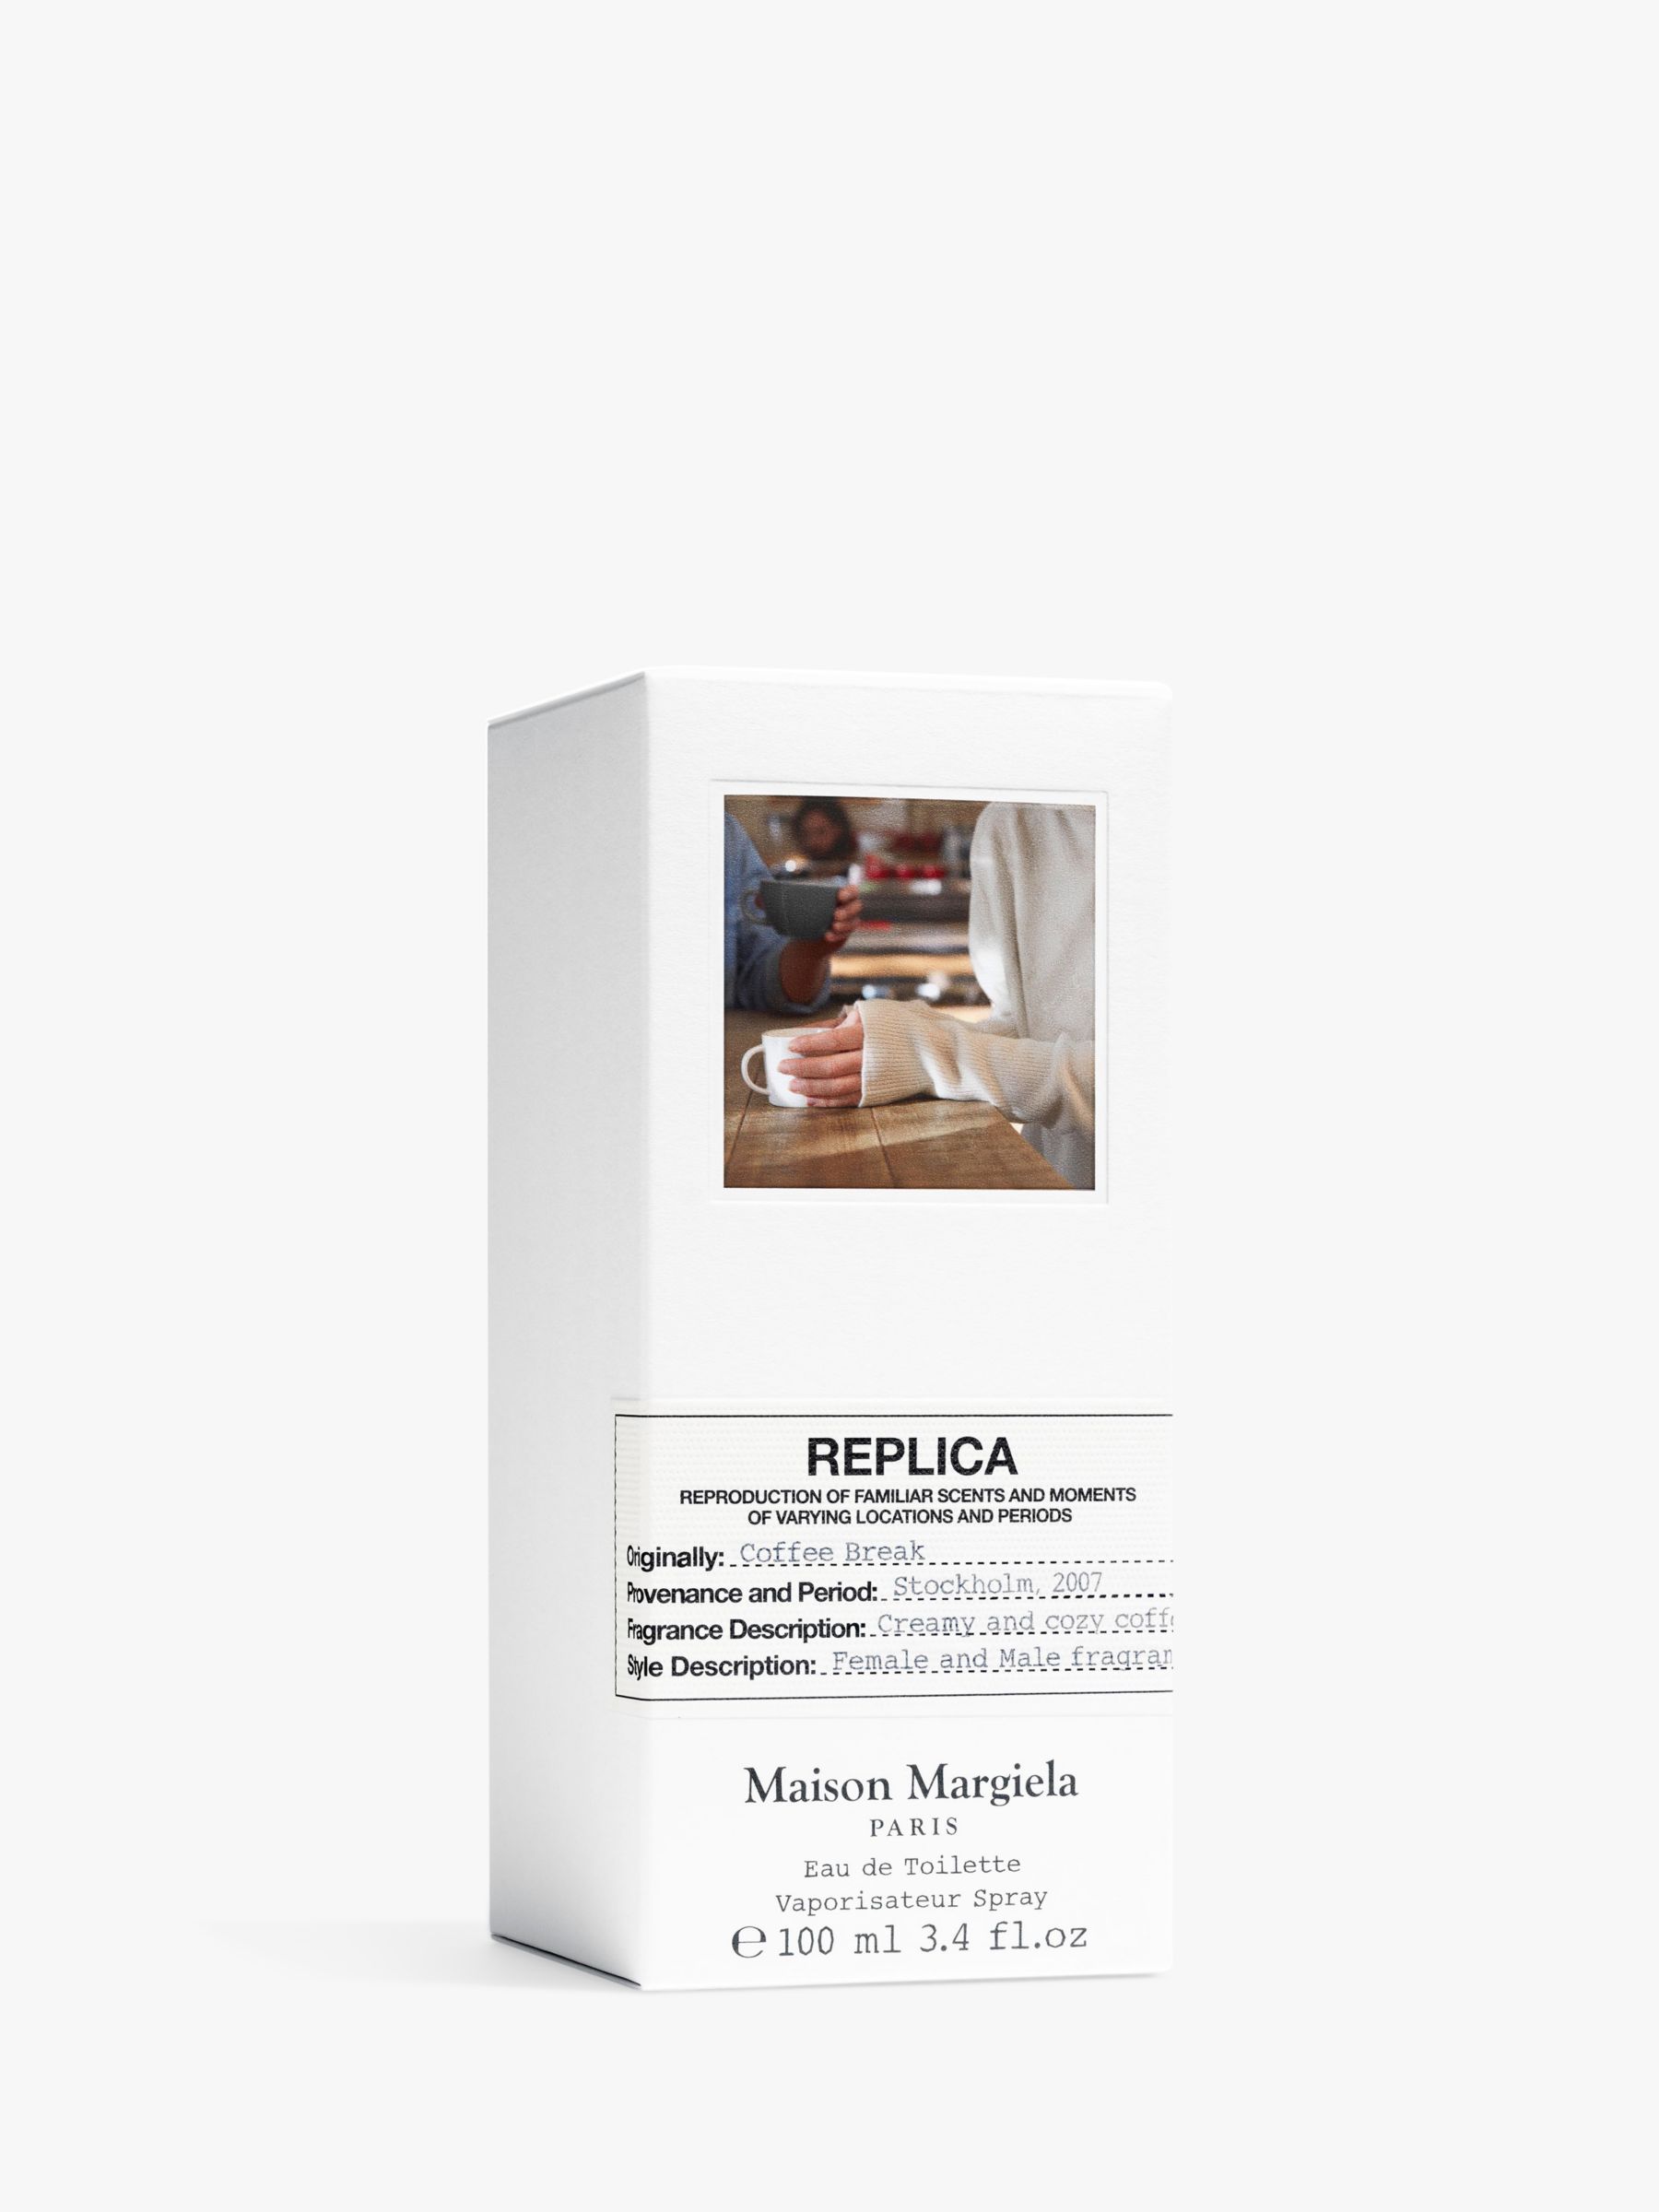 Maison Margiela Replica Coffee Break Eau de Toilette, 100ml